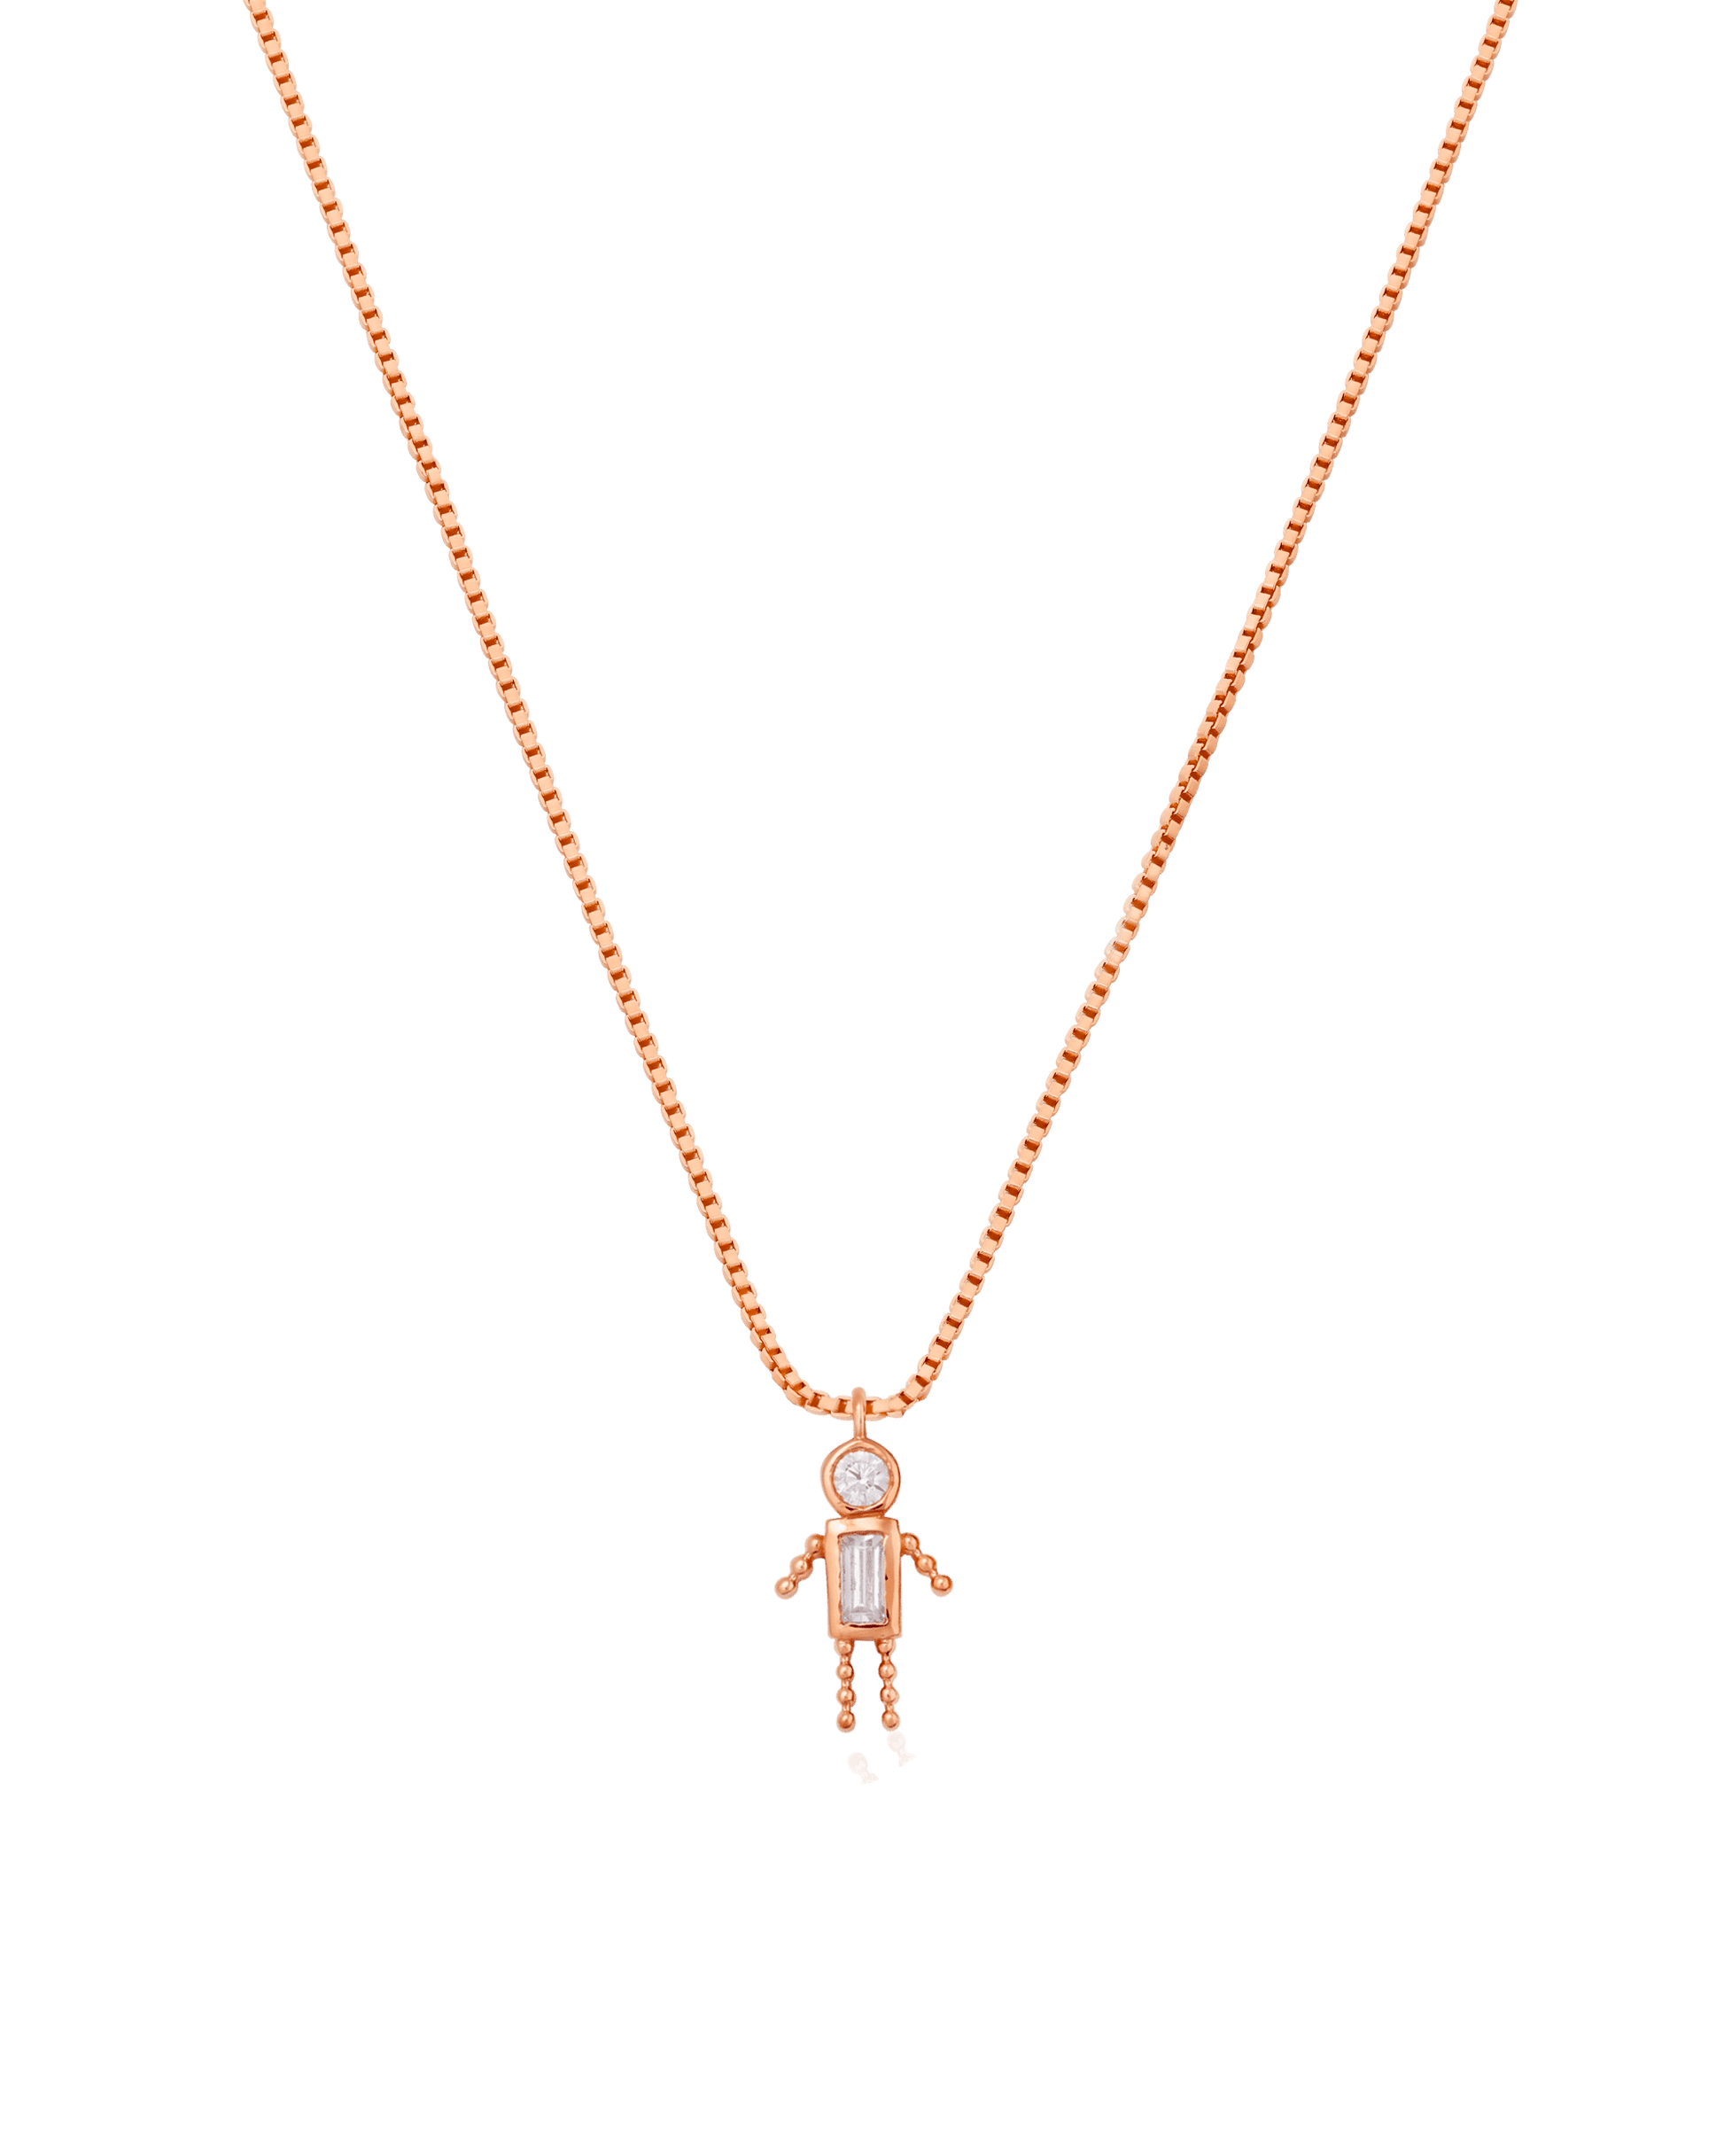 Single Mini Me Necklace - 18K Rose Vermeil Necklaces magal-dev 1 Small - 16" 